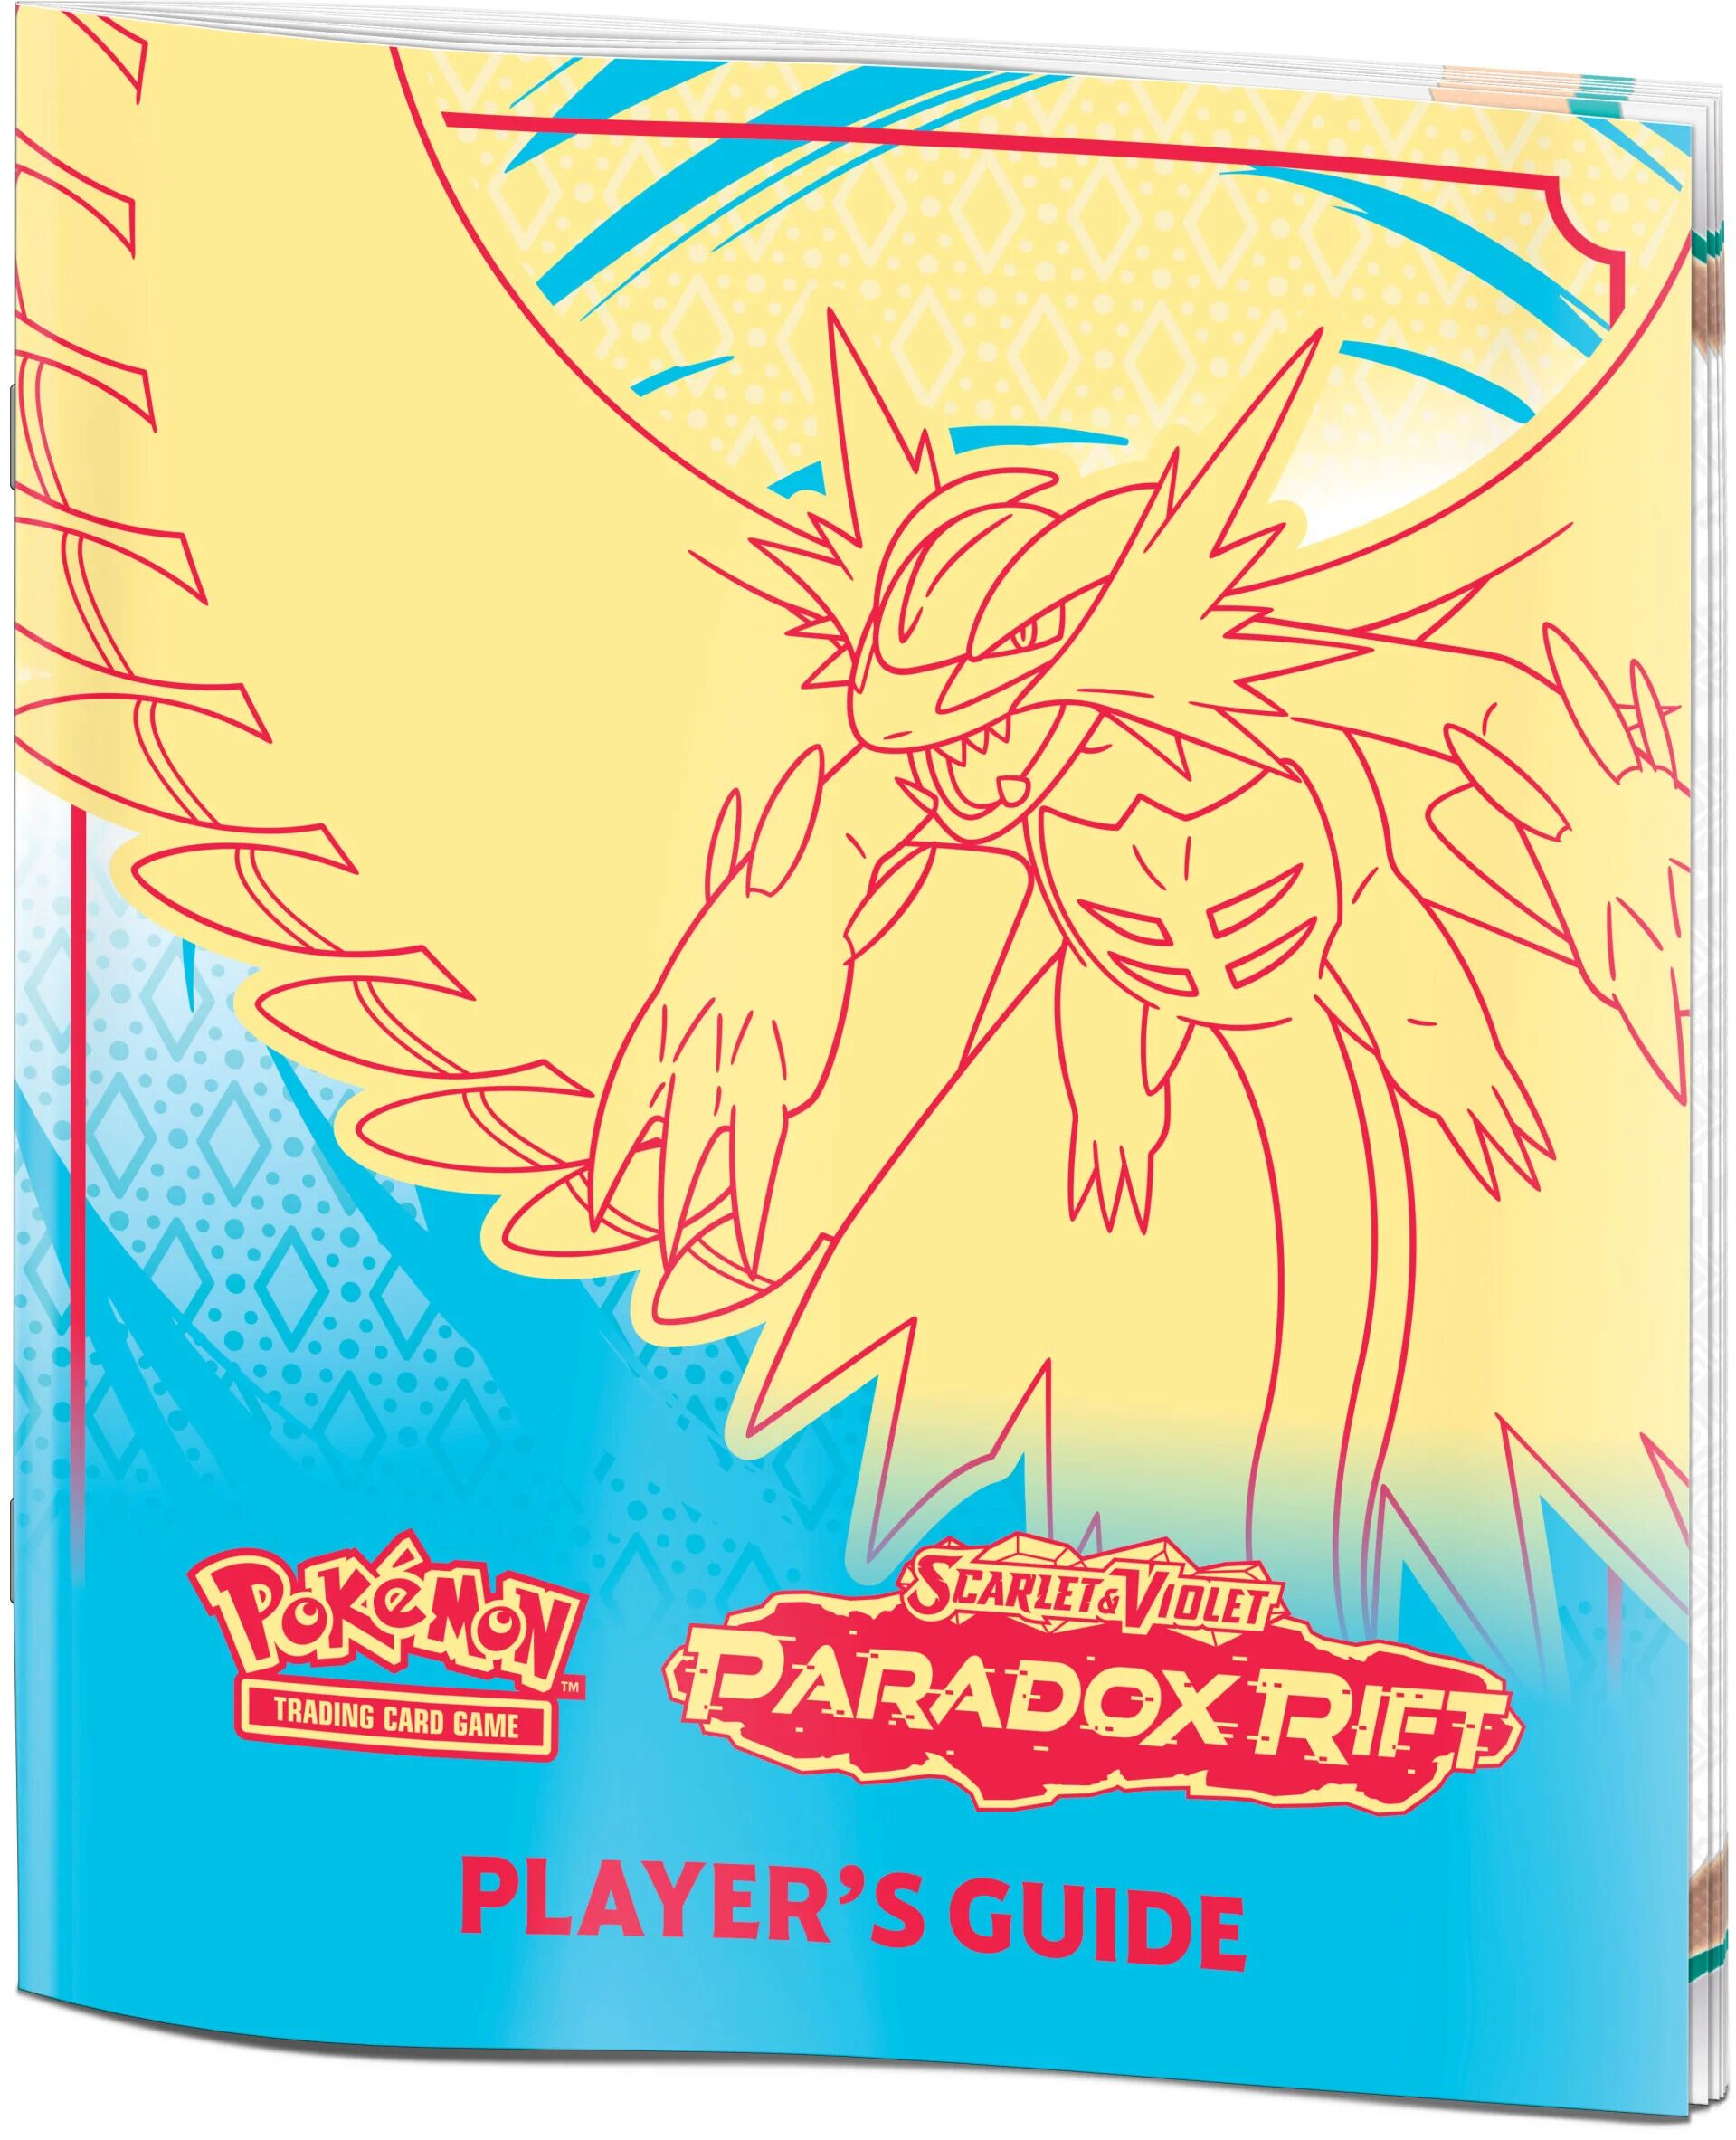 Pokémon TCG: Scarlet & Violet - Paradox Rift Elite Trainer Box Roaring Moon - EN